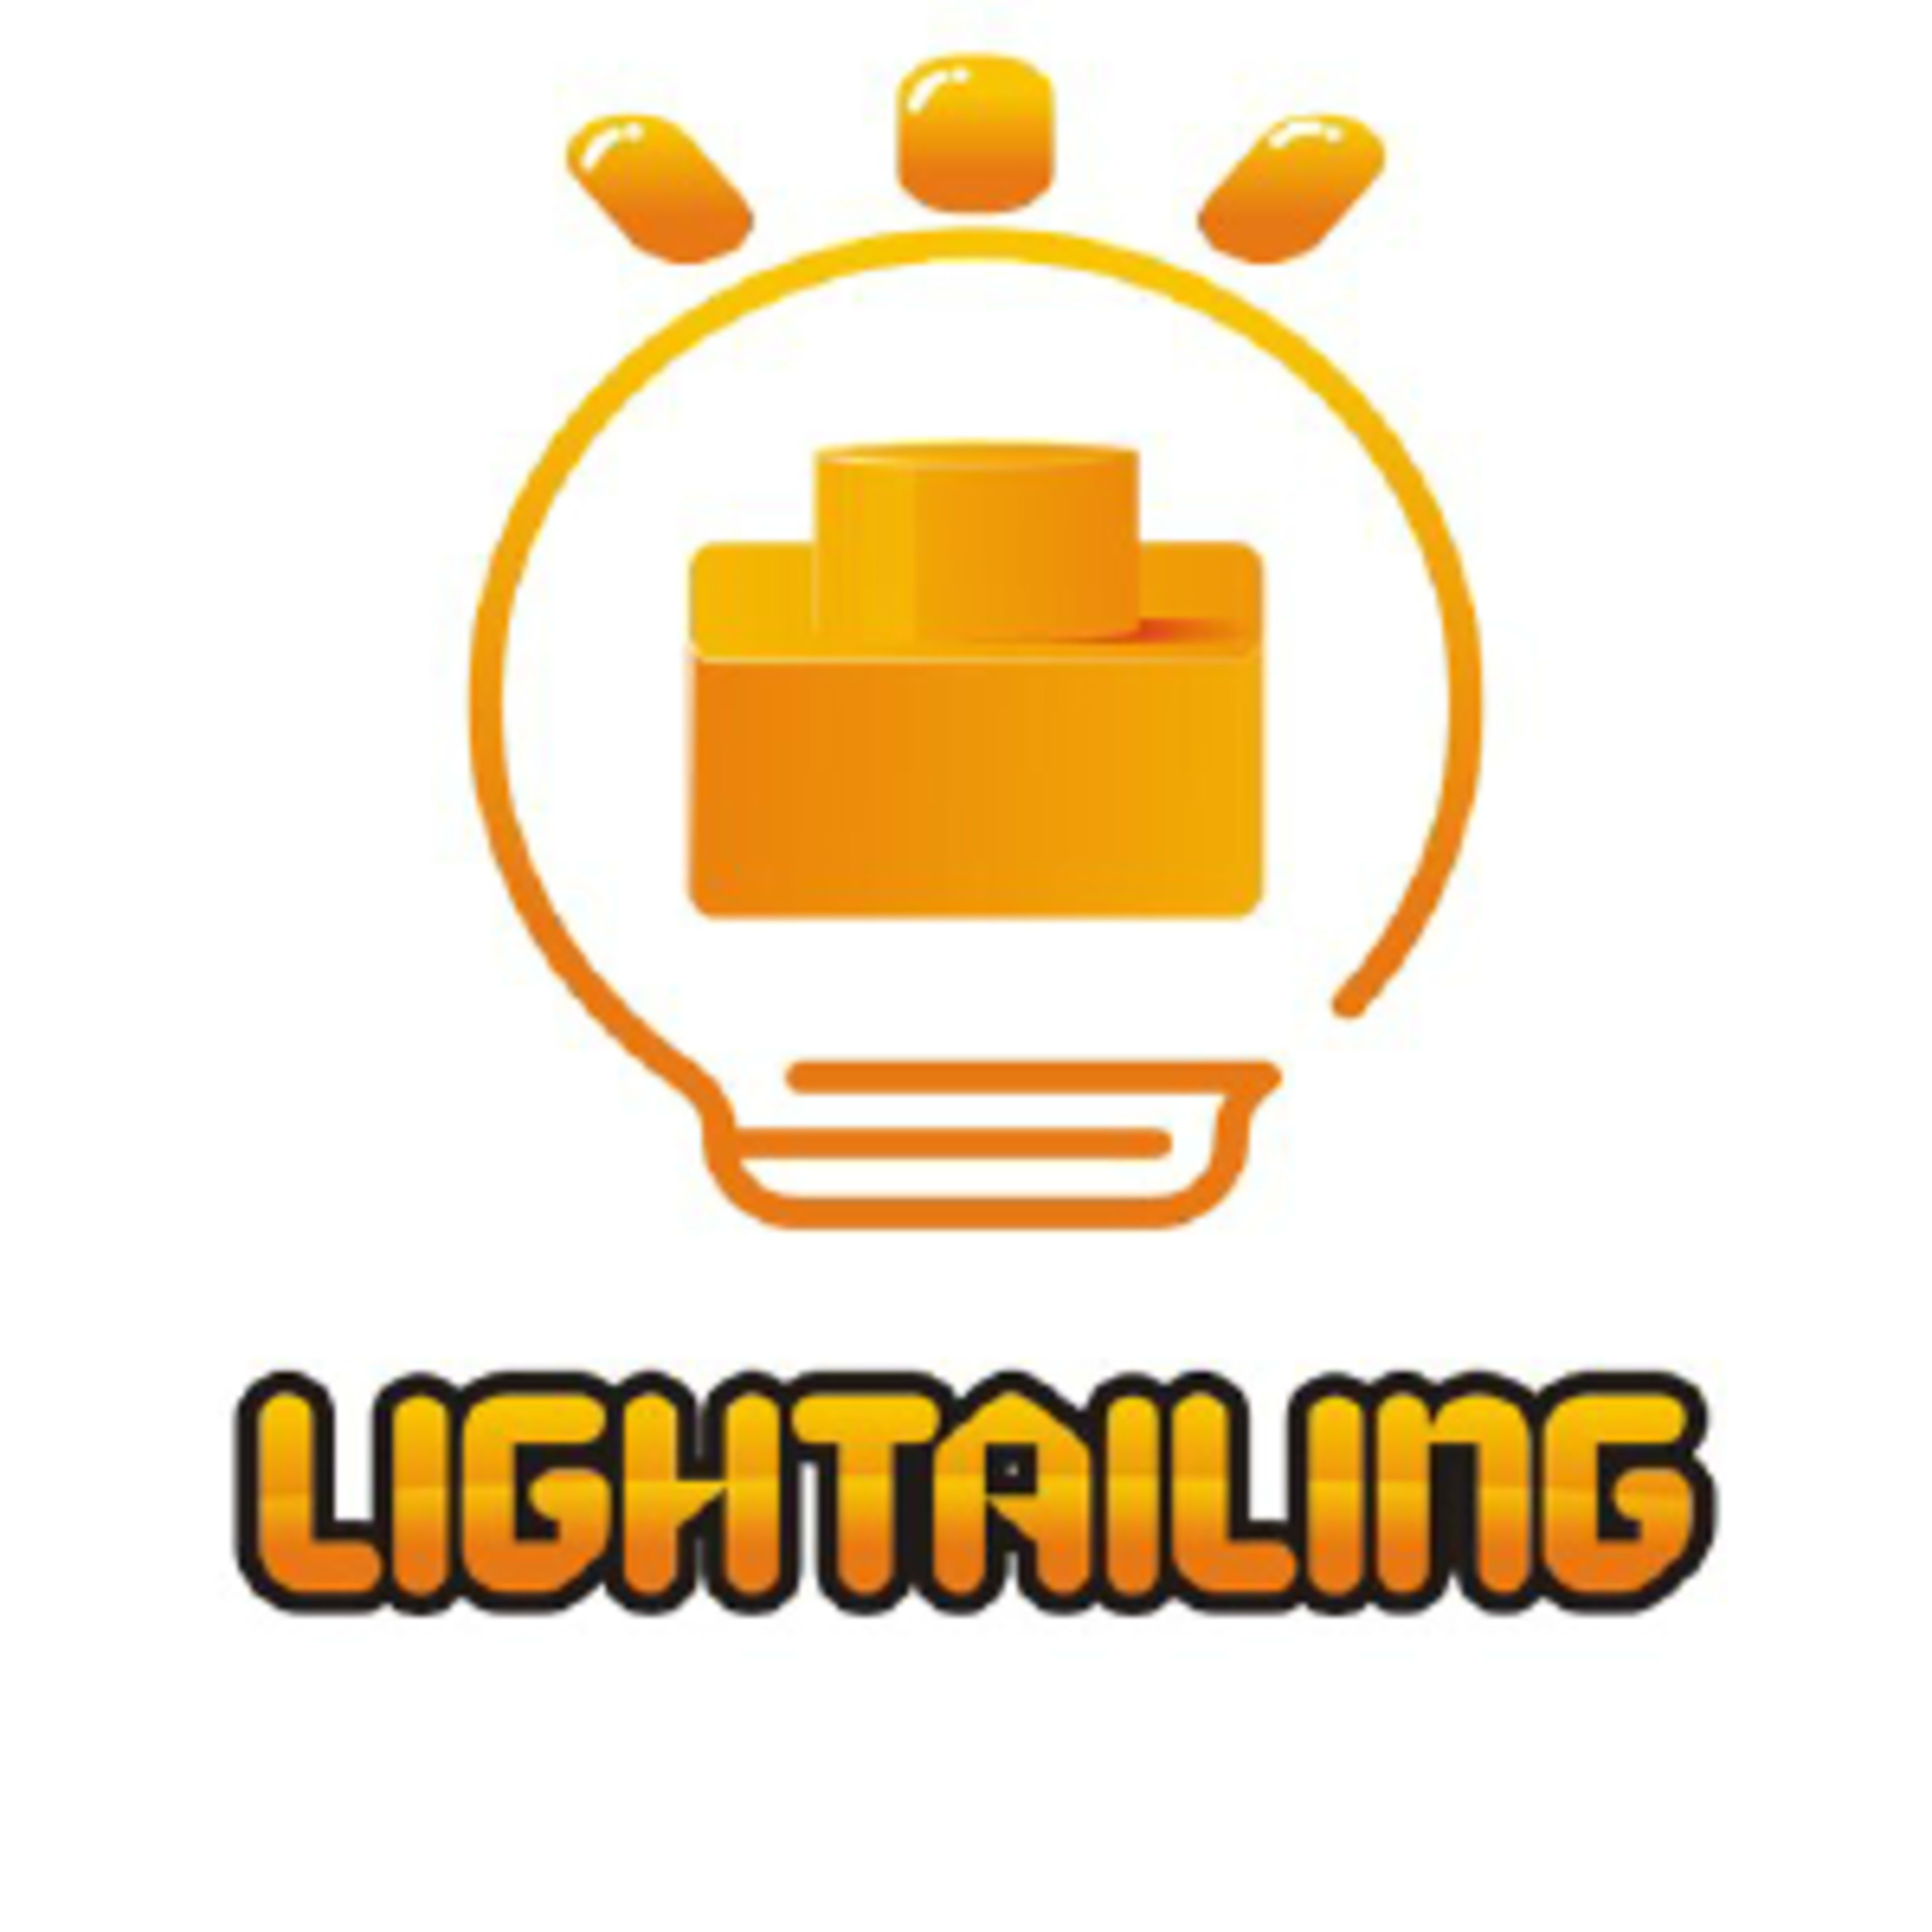 LightailingCode